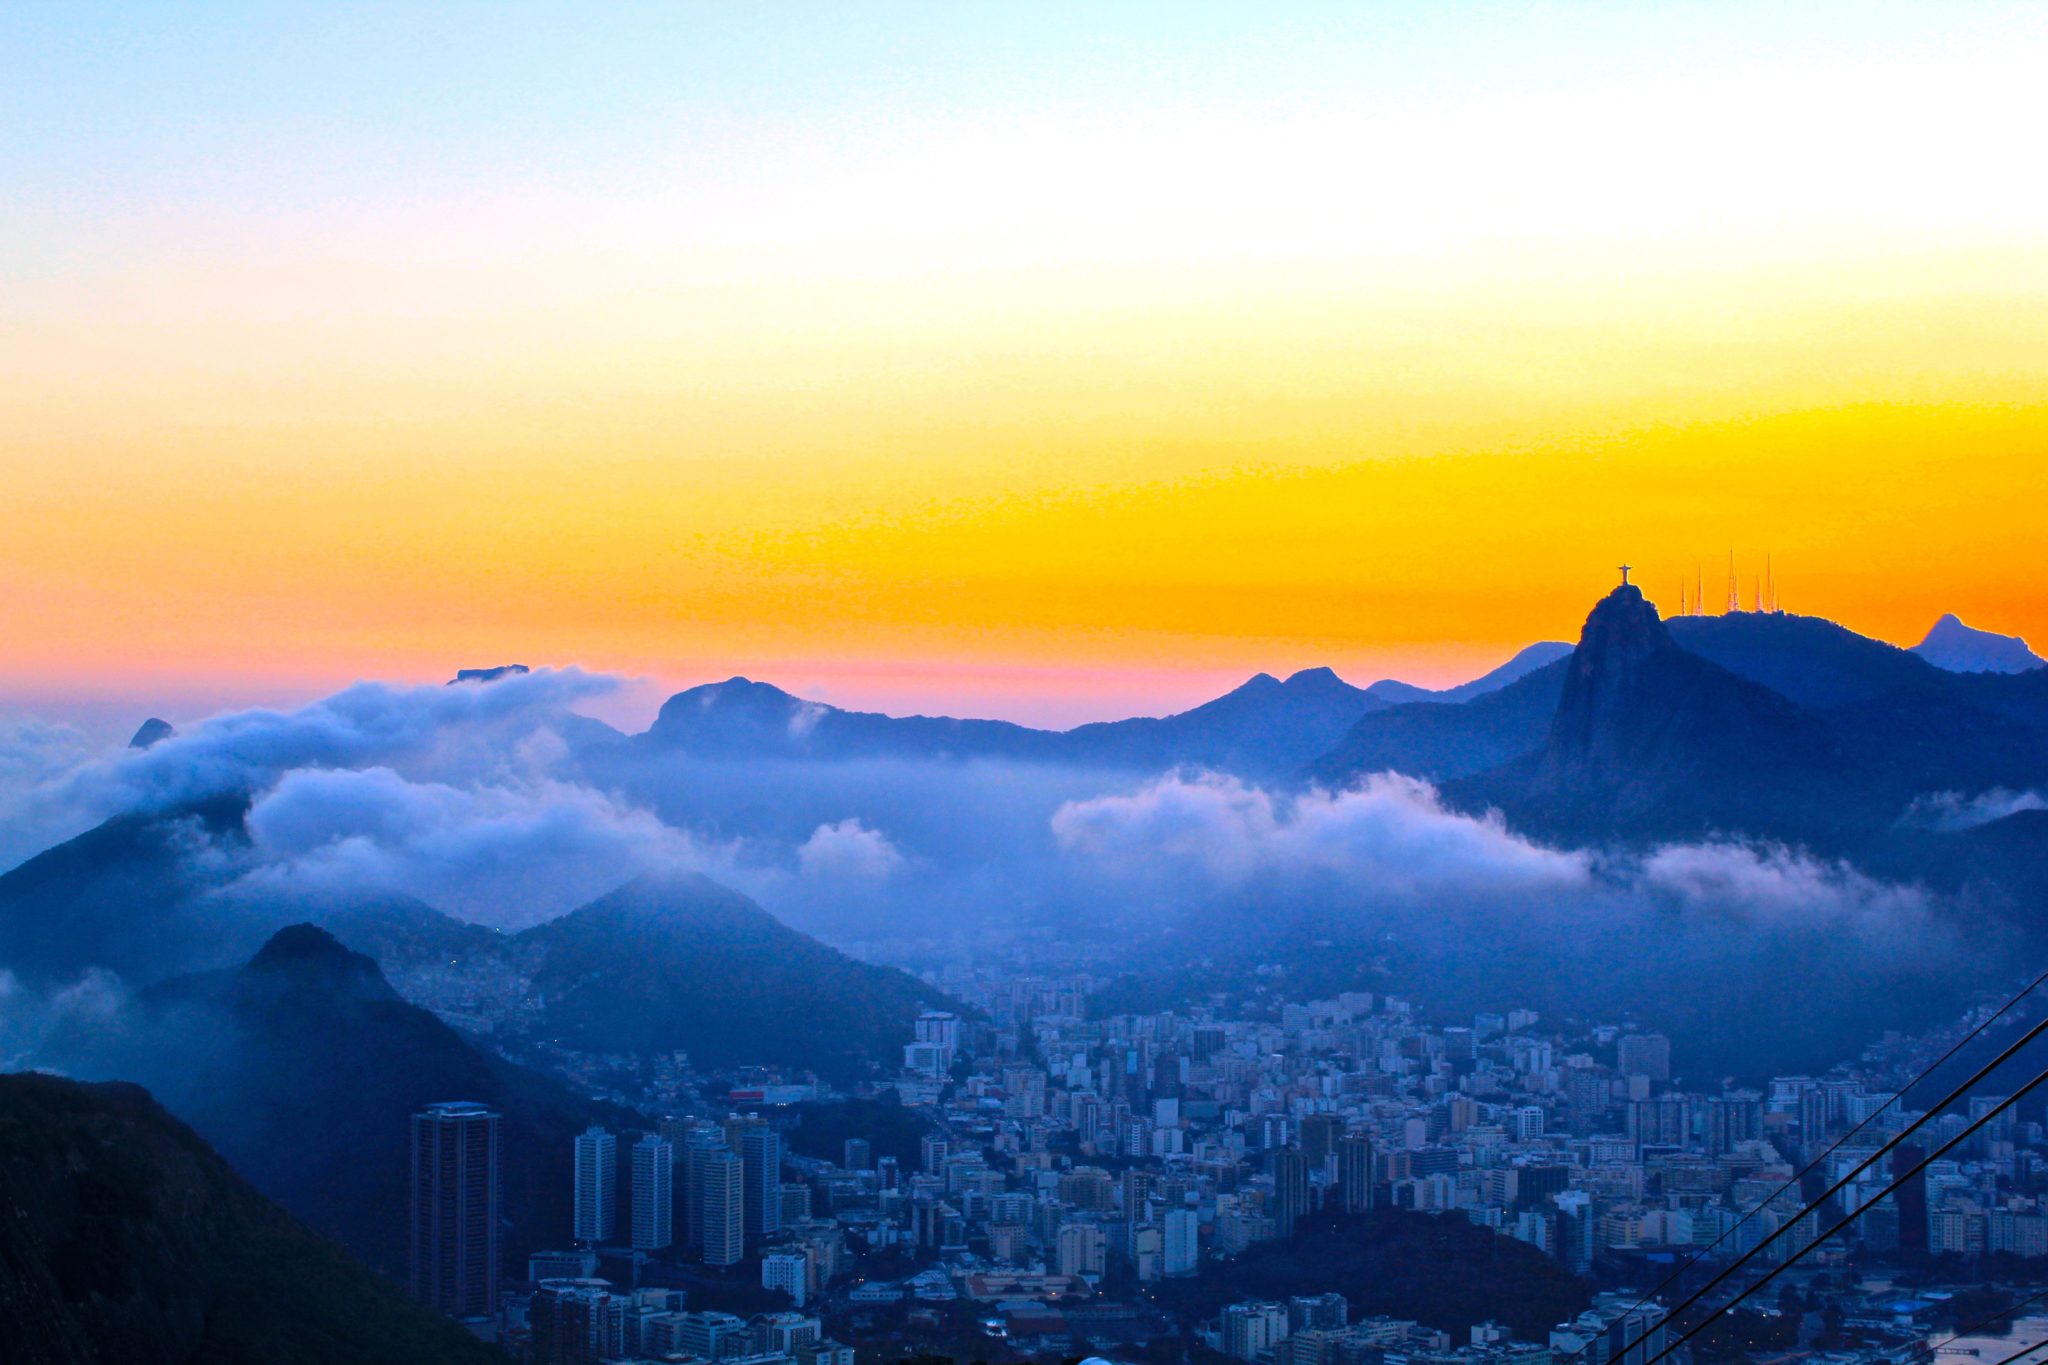 Sugarloaf Mountain, Rio de Janeiro | WORLD OF WANDERLUST